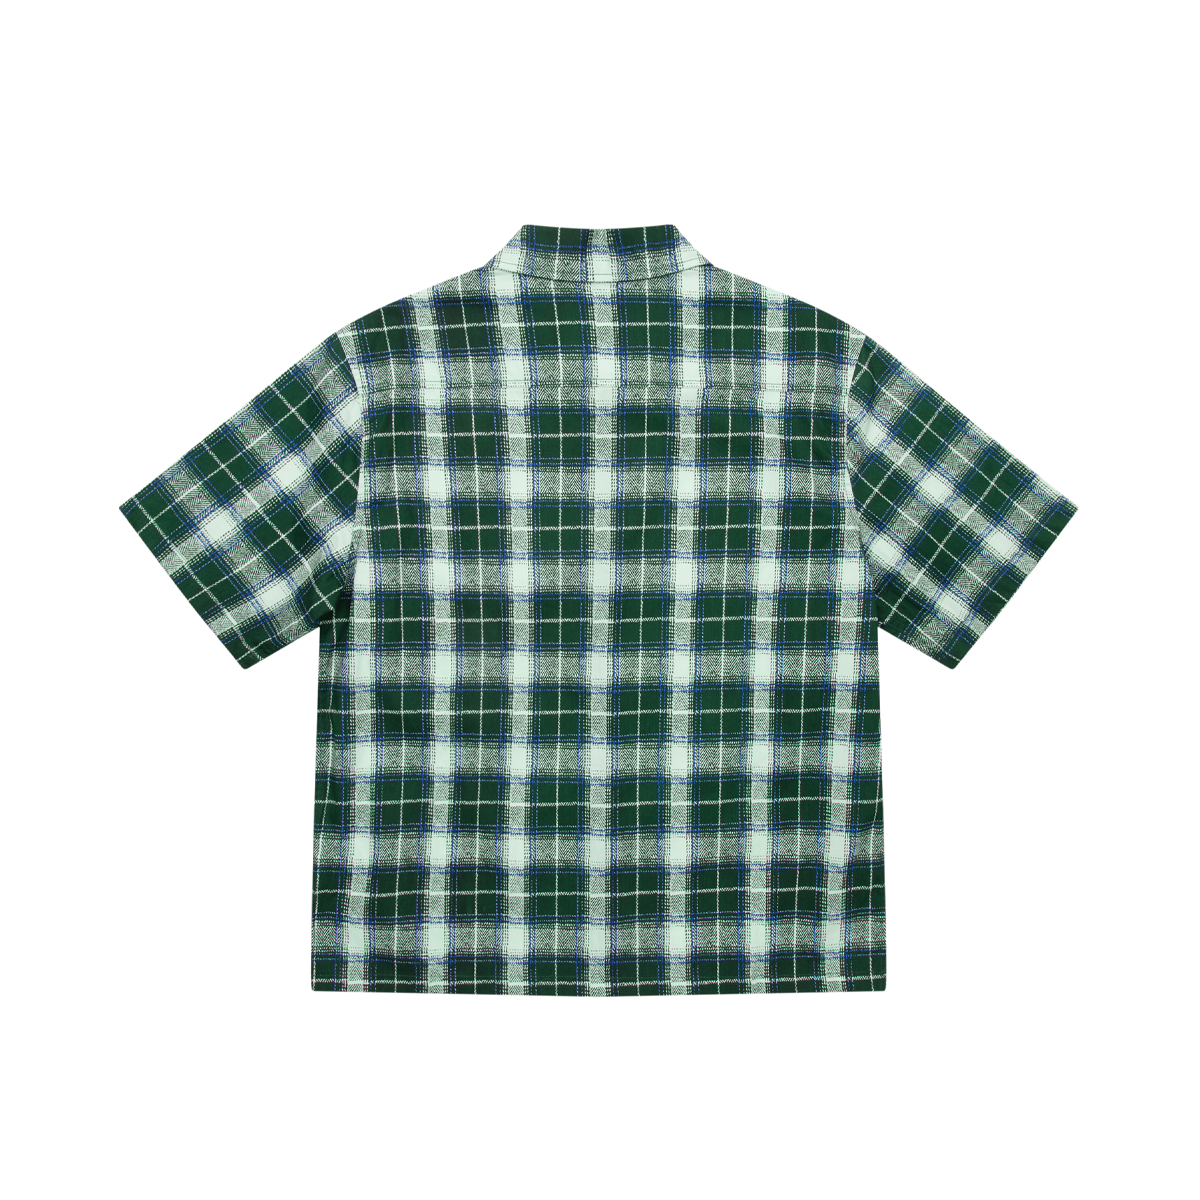 WKND Wilson Zip Shirt - Green Plaid